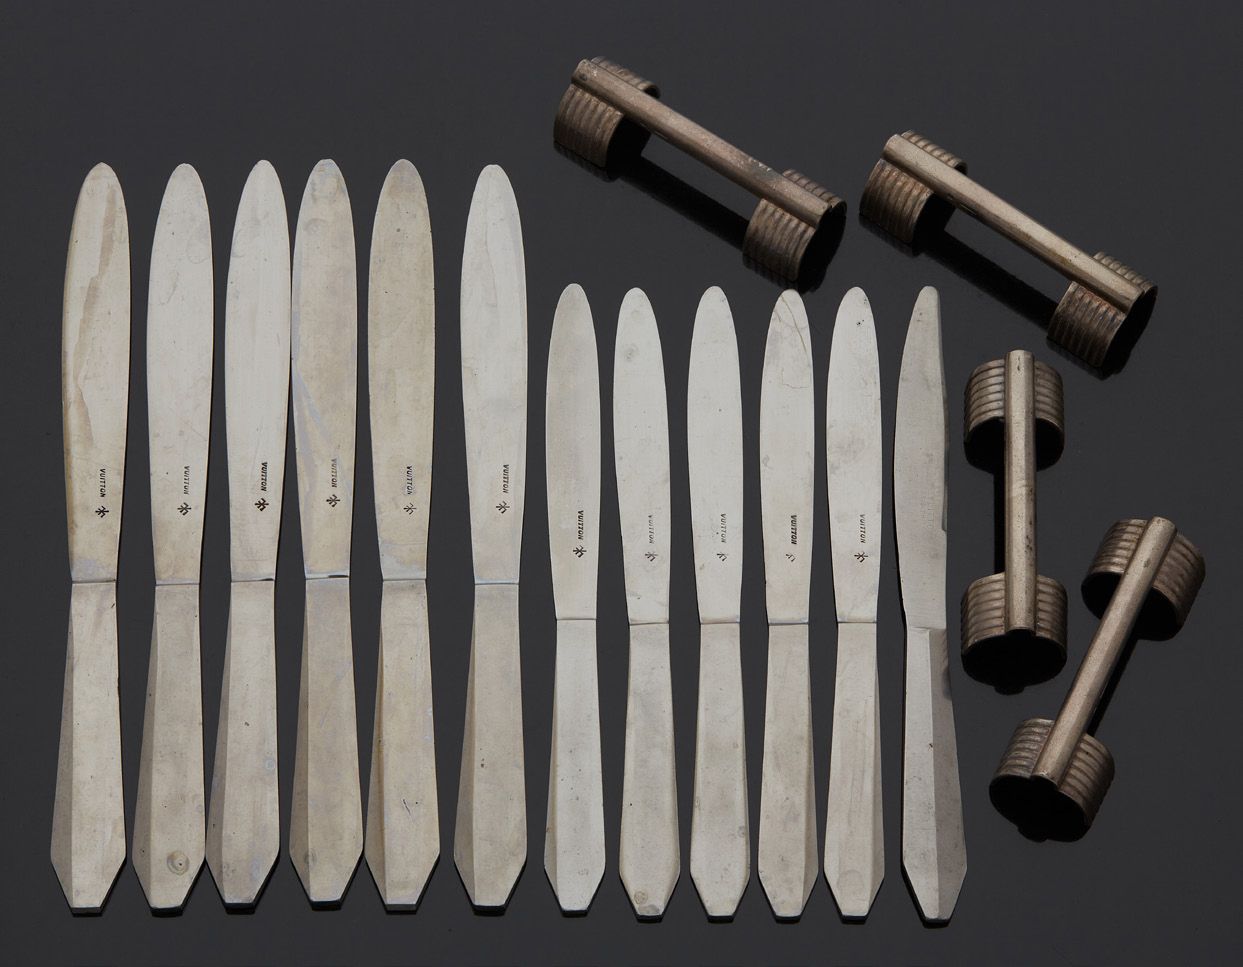 LOUIS VUITTON 一套19把大刀和14把小刀的钢制刀。
刀片上标有LV的字样。
，包括4个刀架。